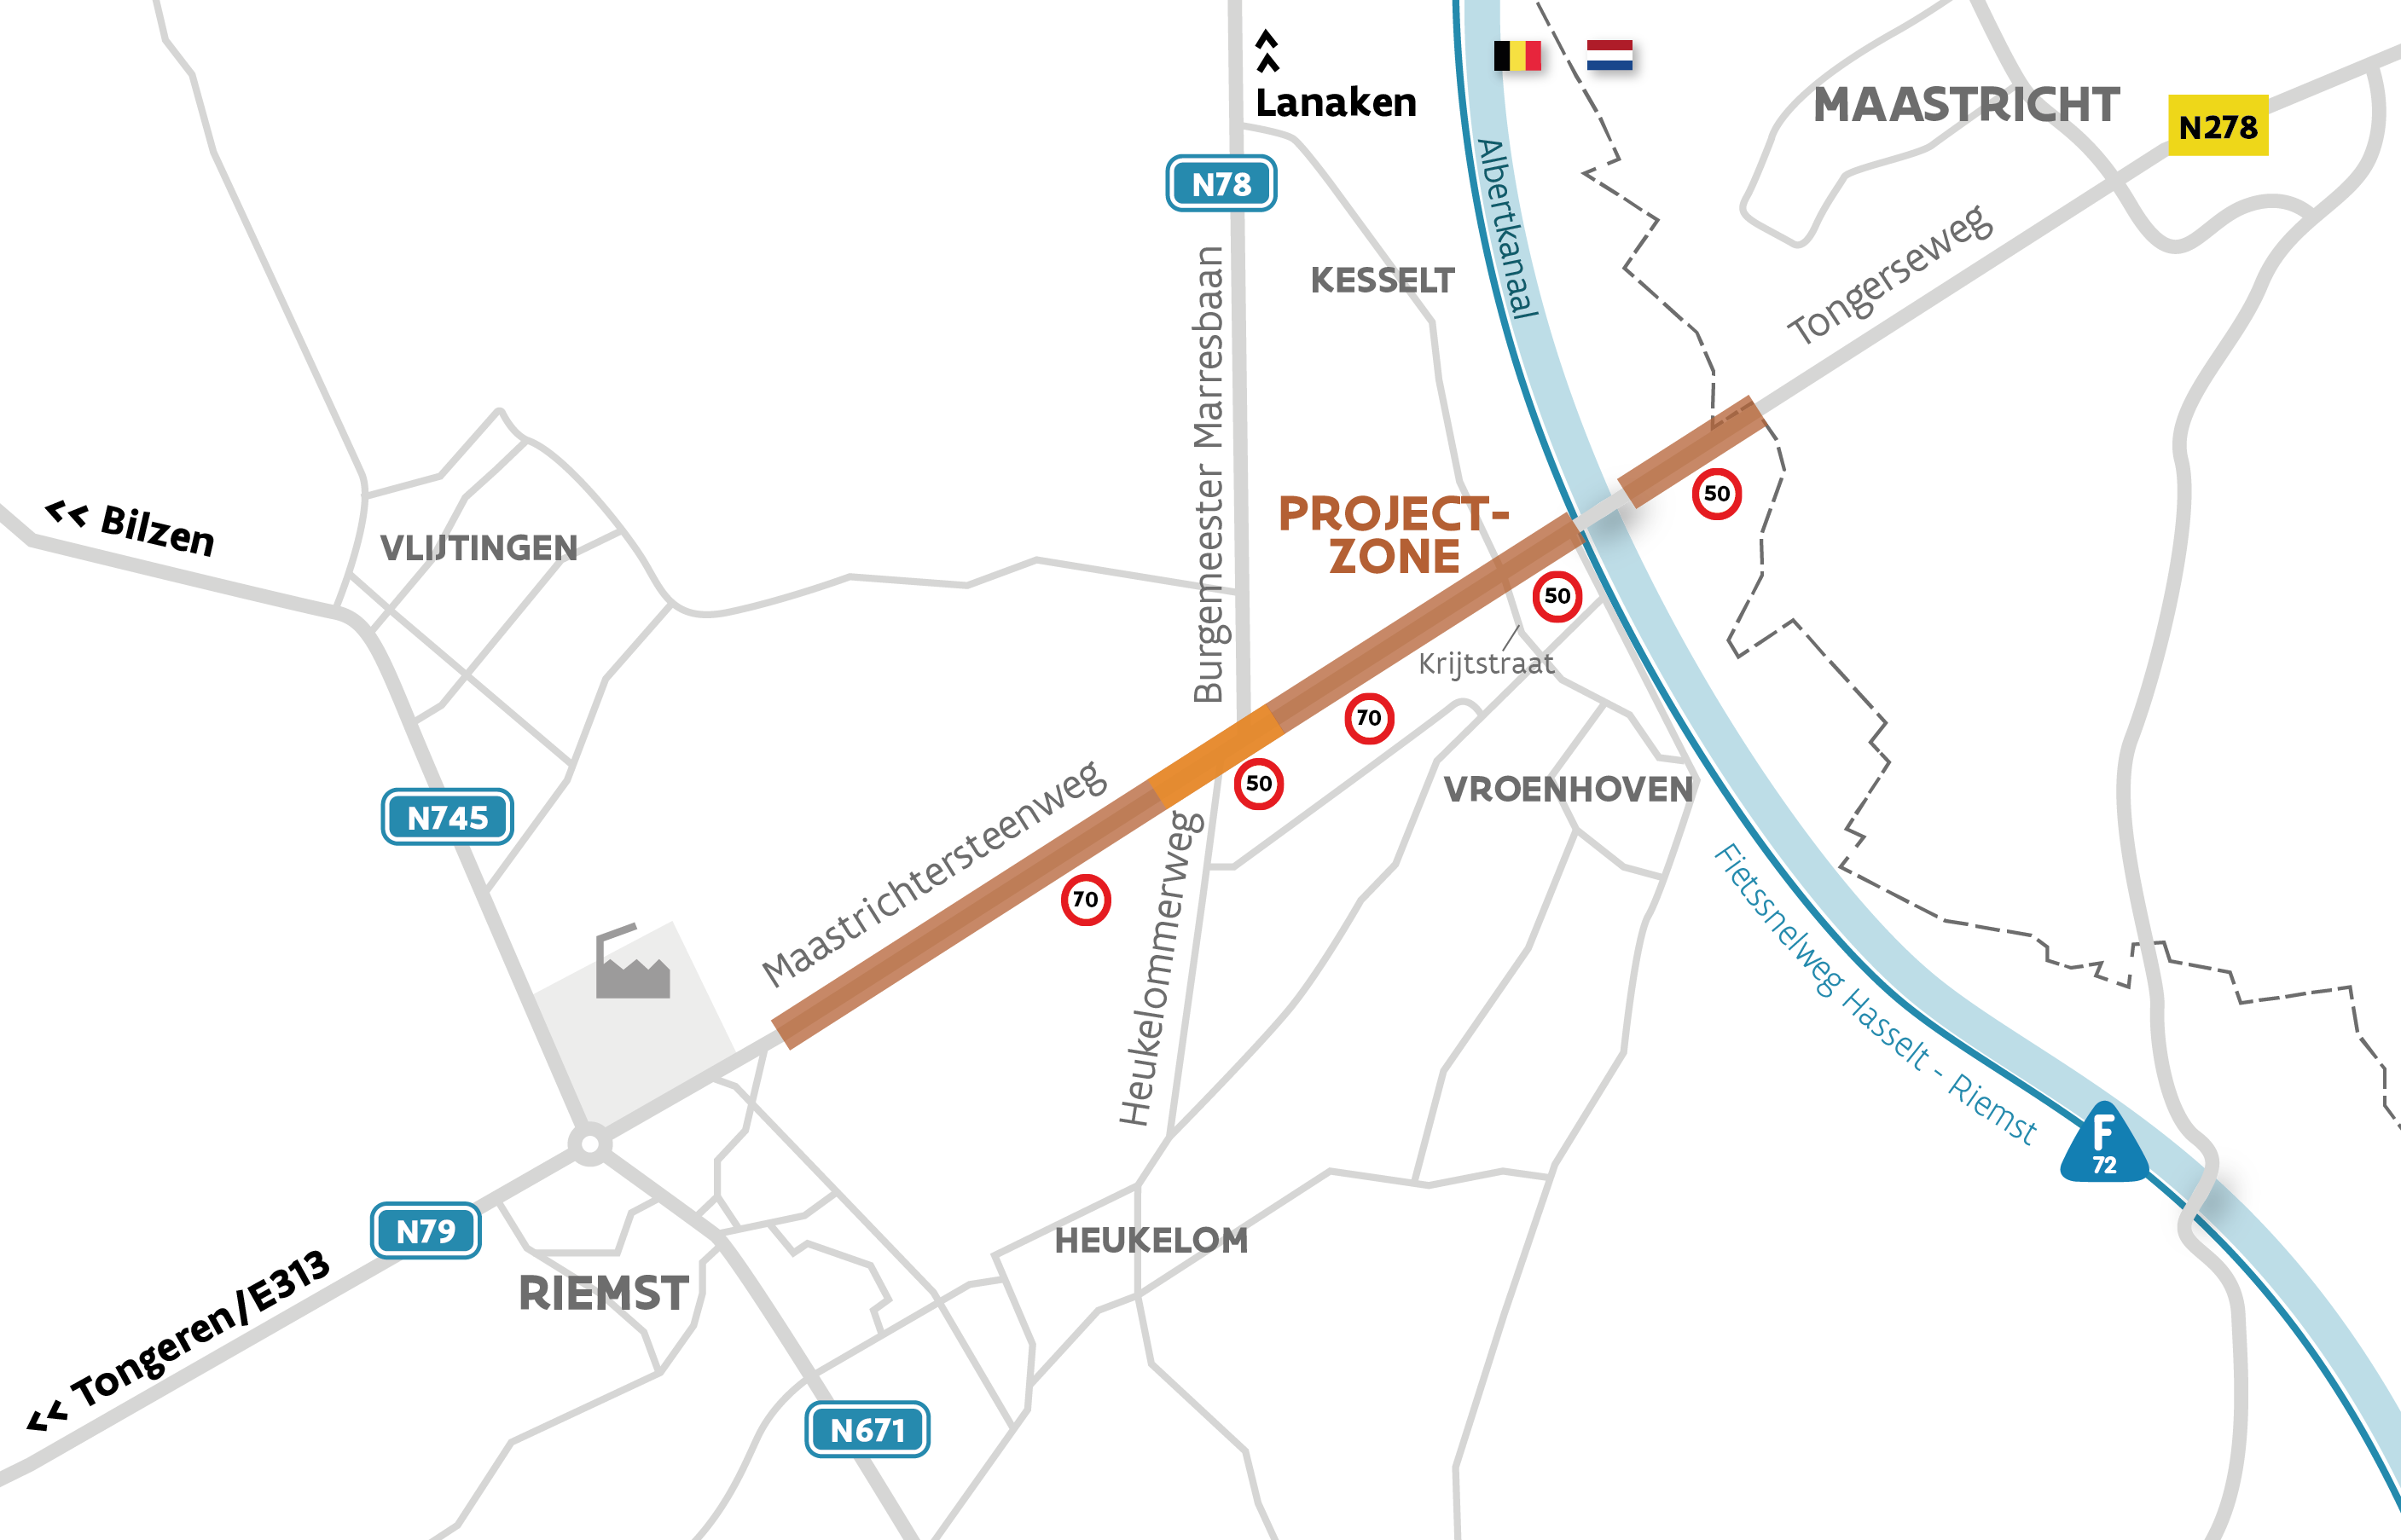 N79 Vroenhoven - grote projectzone